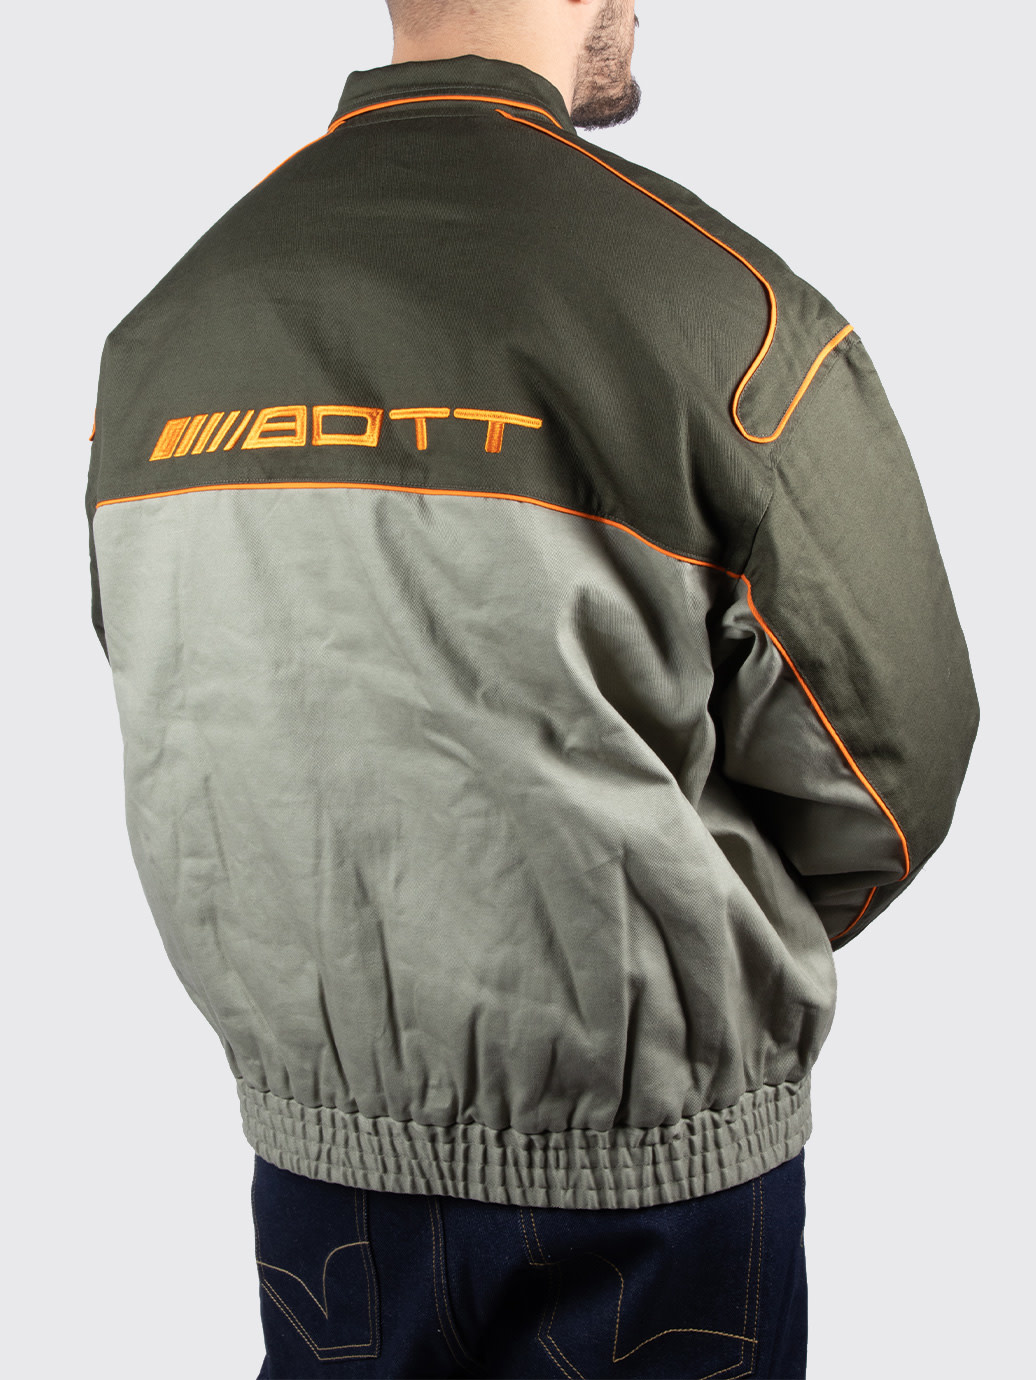 BoTT BoTT Cotton Racing Jacket Green -